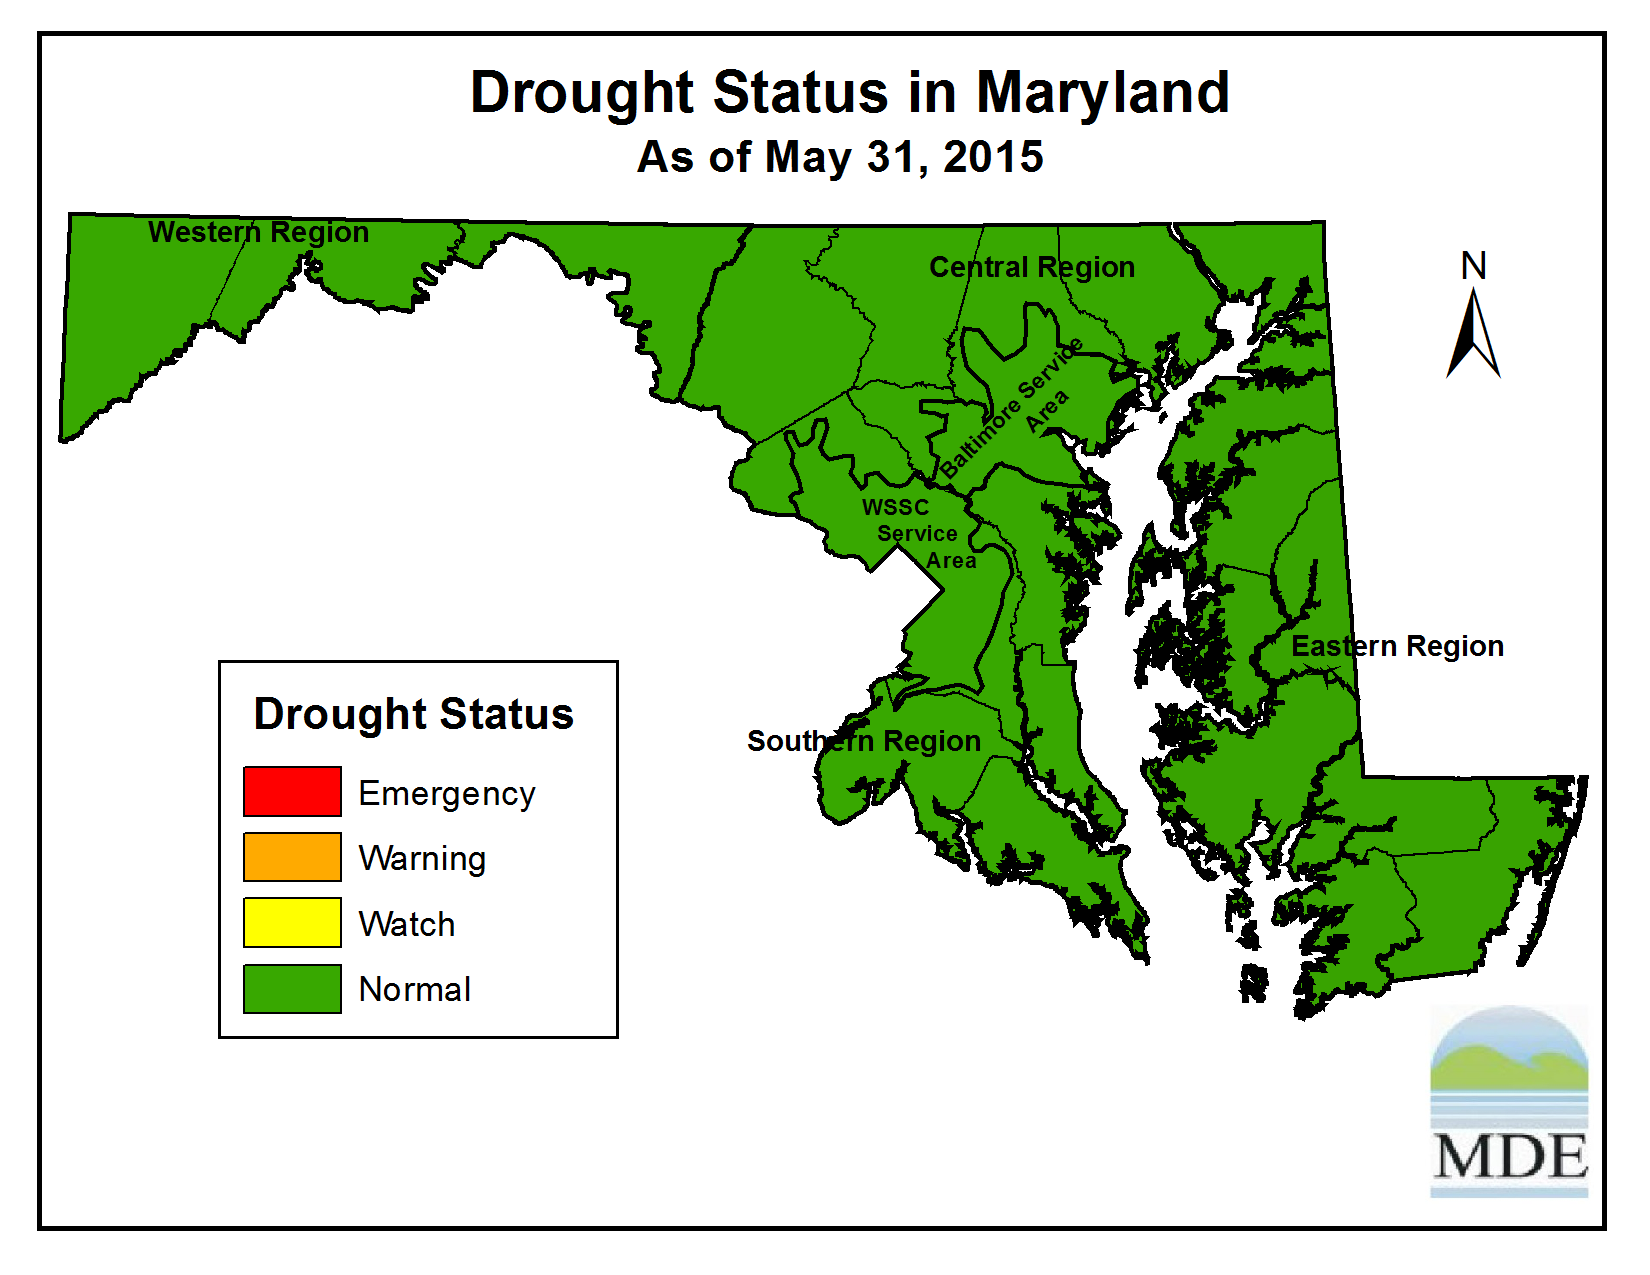 Drought Status as of May 31, 2015